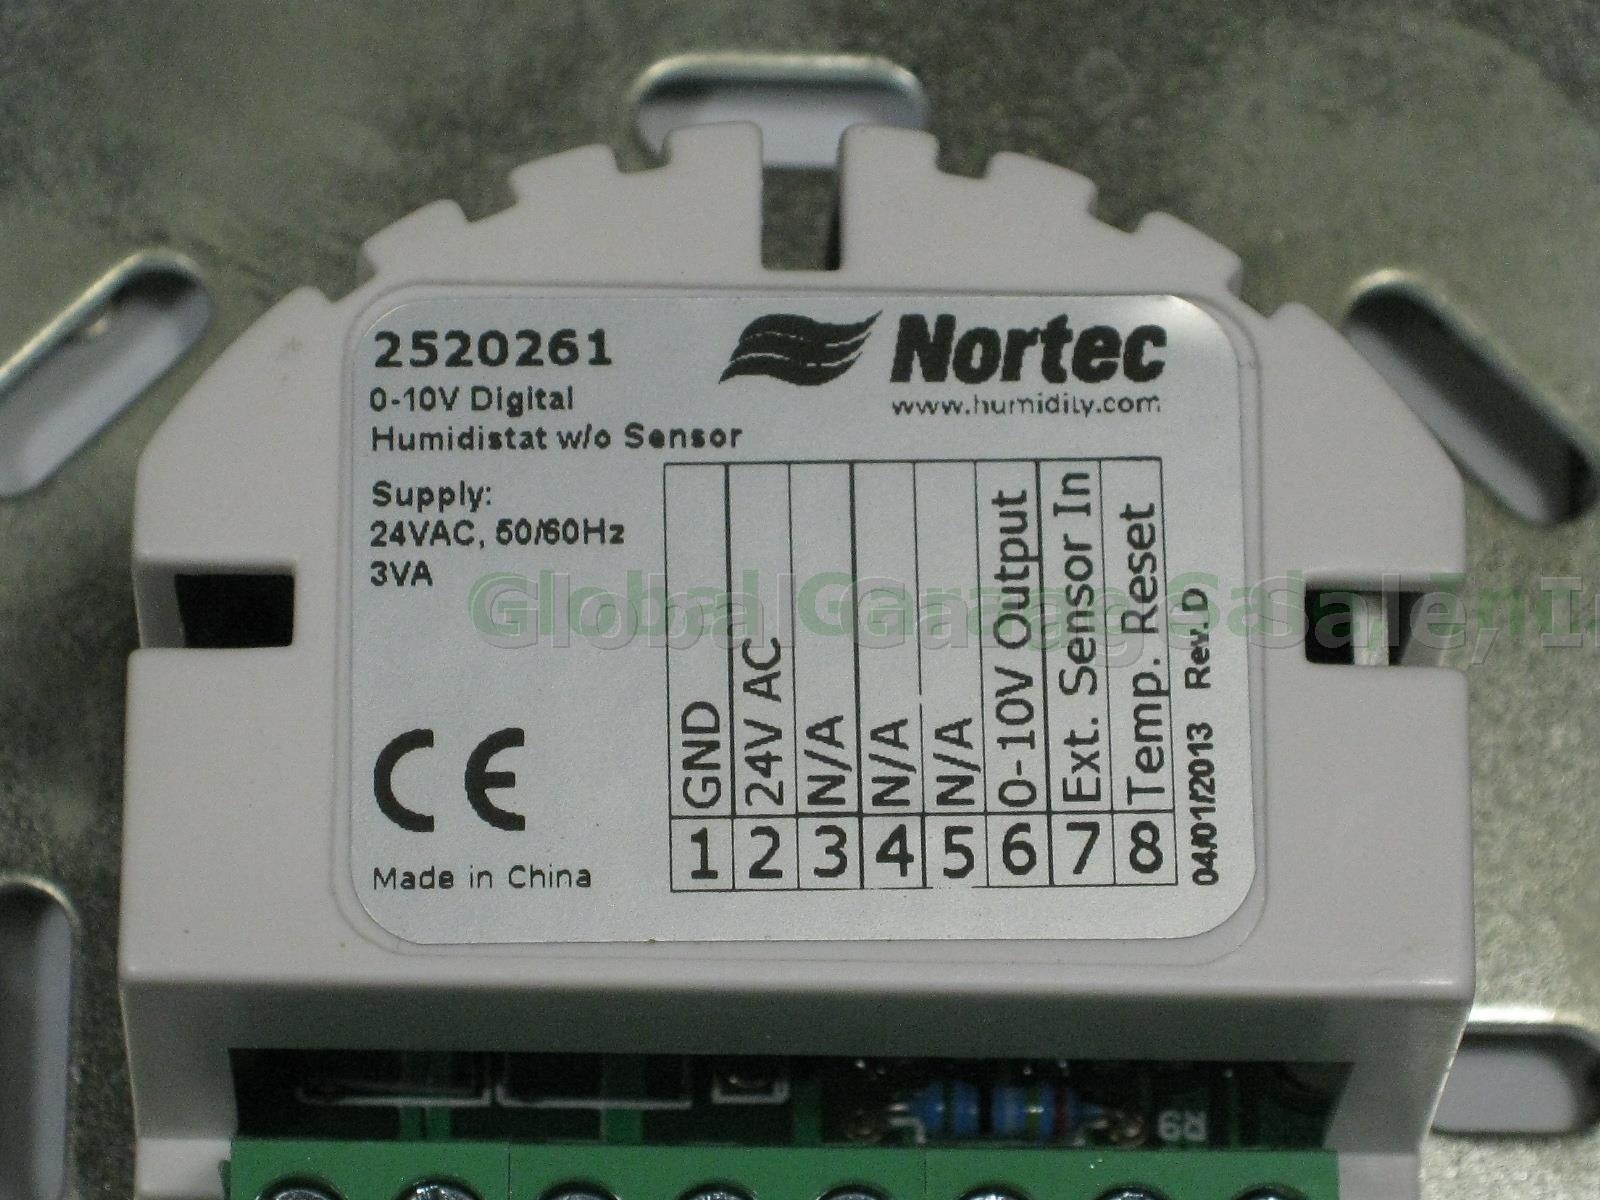 New Nortec 252-0266 0-10V Digital Modulating Duct Mount Humidistat Pkg Rev C NR! 3